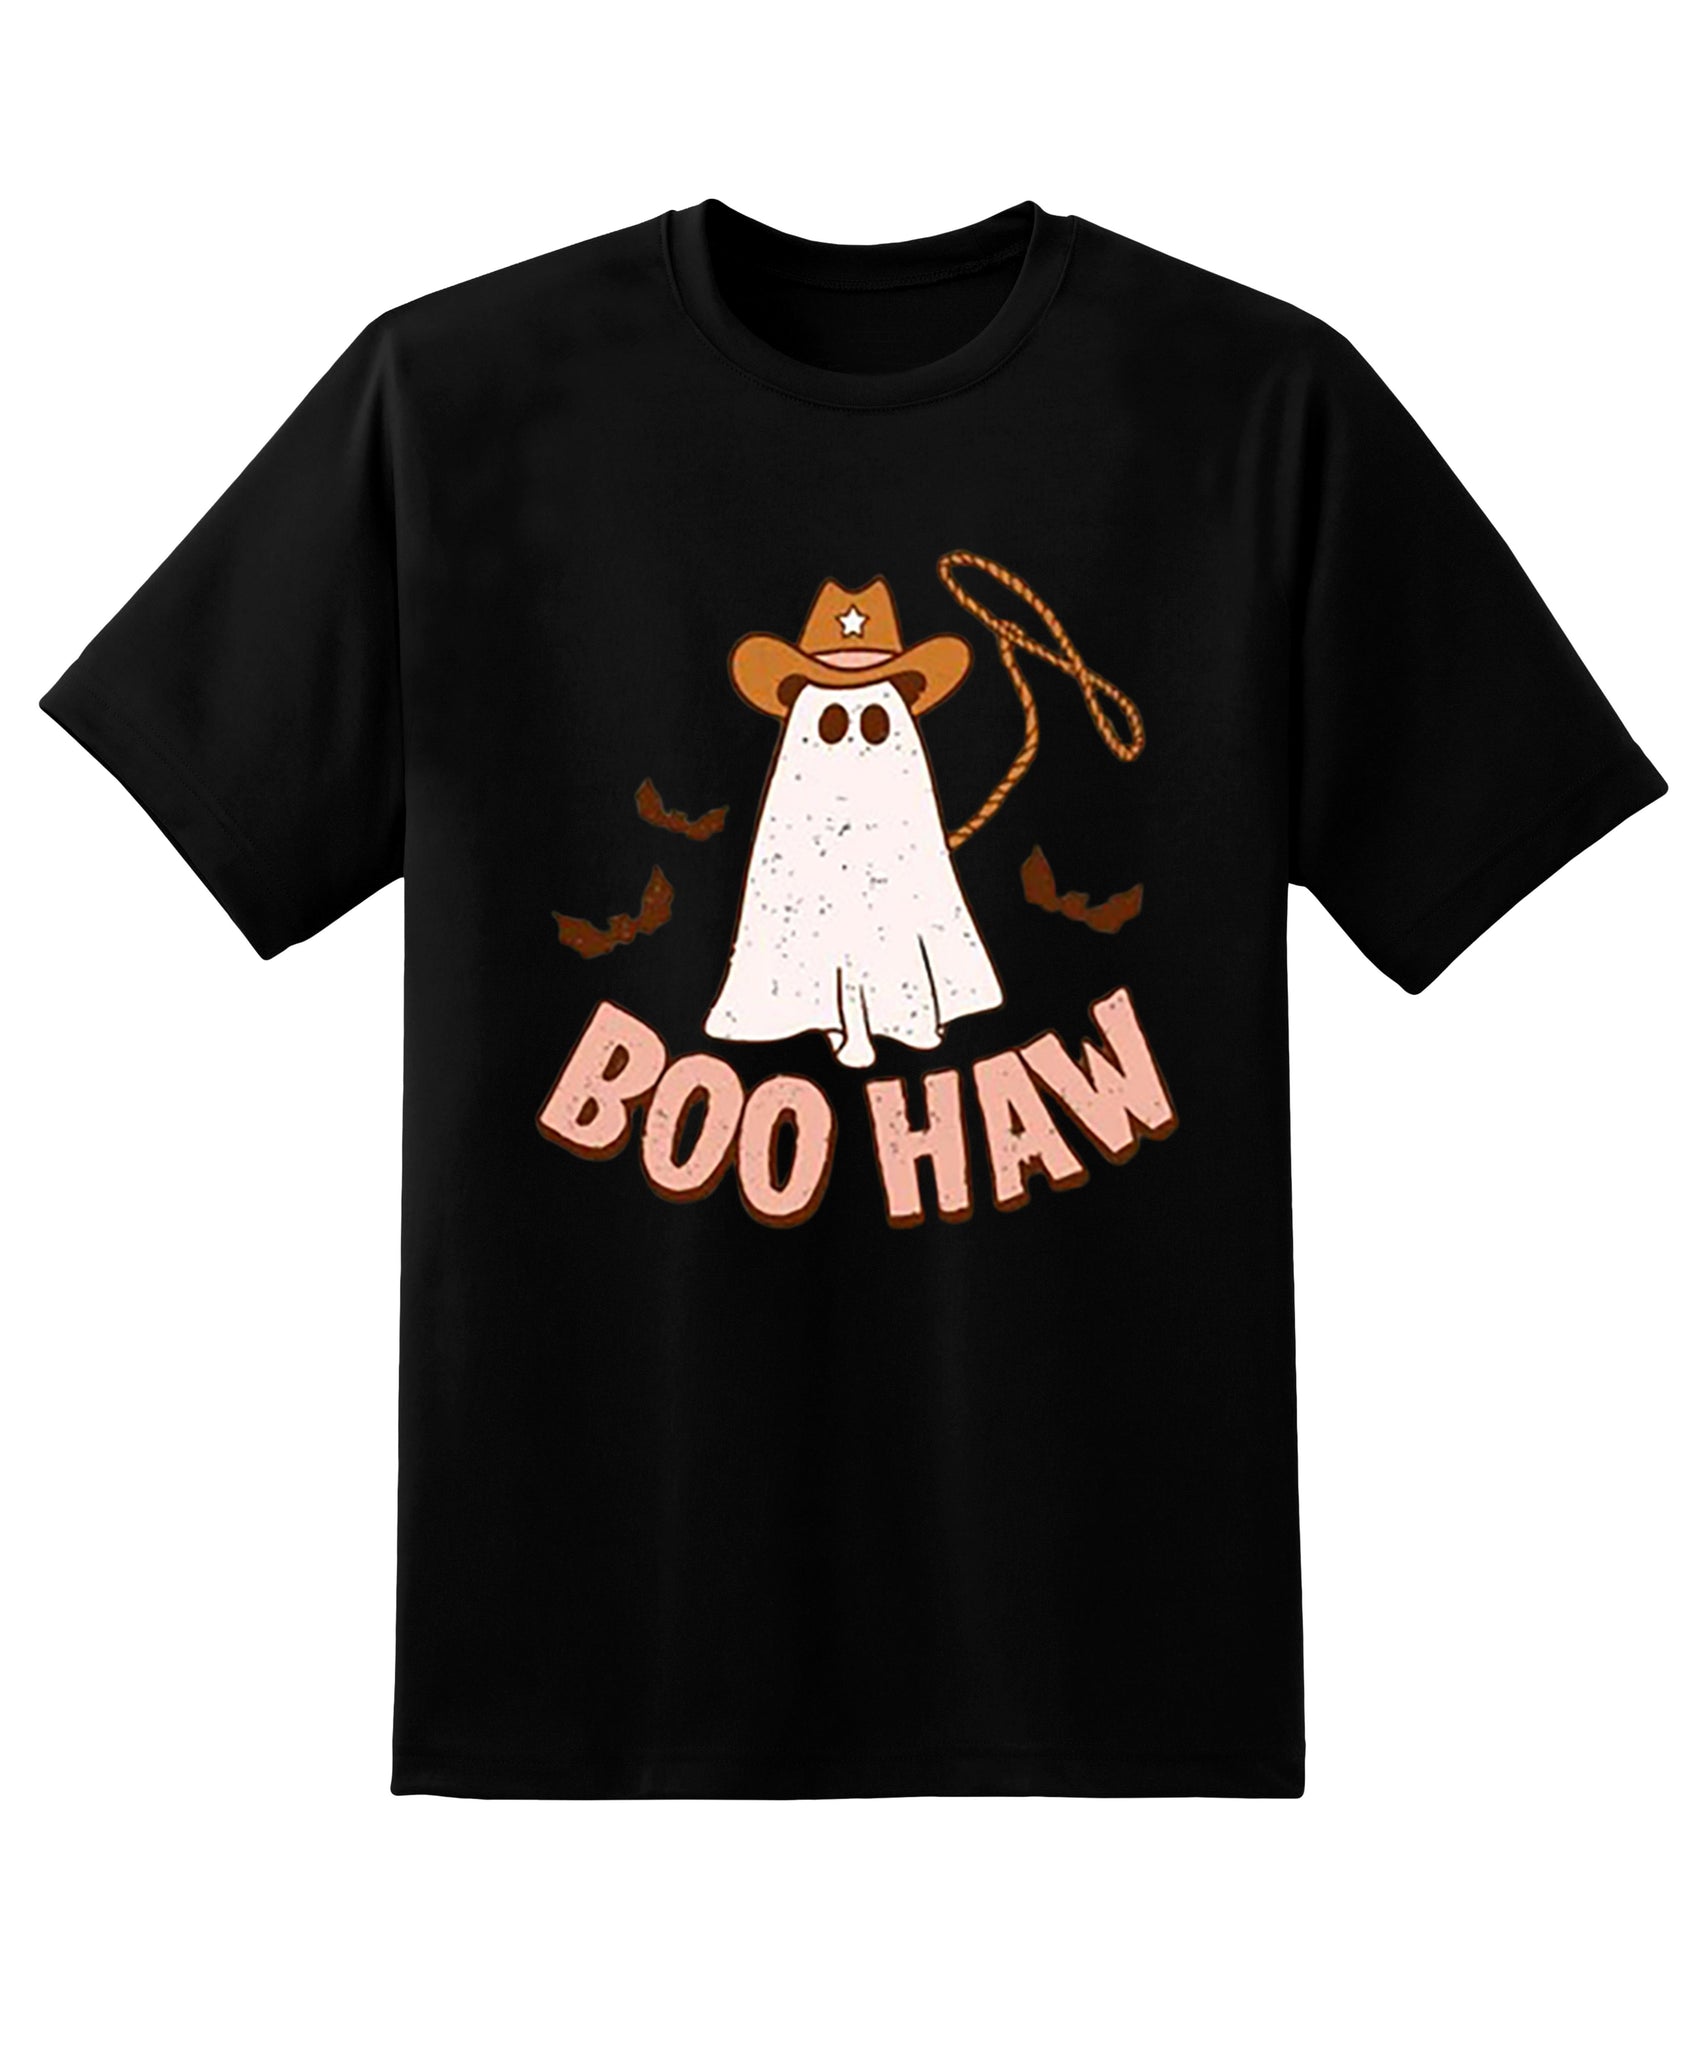 Skitongift Cute Ghost Country Cowgirl Halloween Shirt,Cowboy Ghost Shirt,Boo Haw Western Halloween Shirt,Retro Halloween Shirt